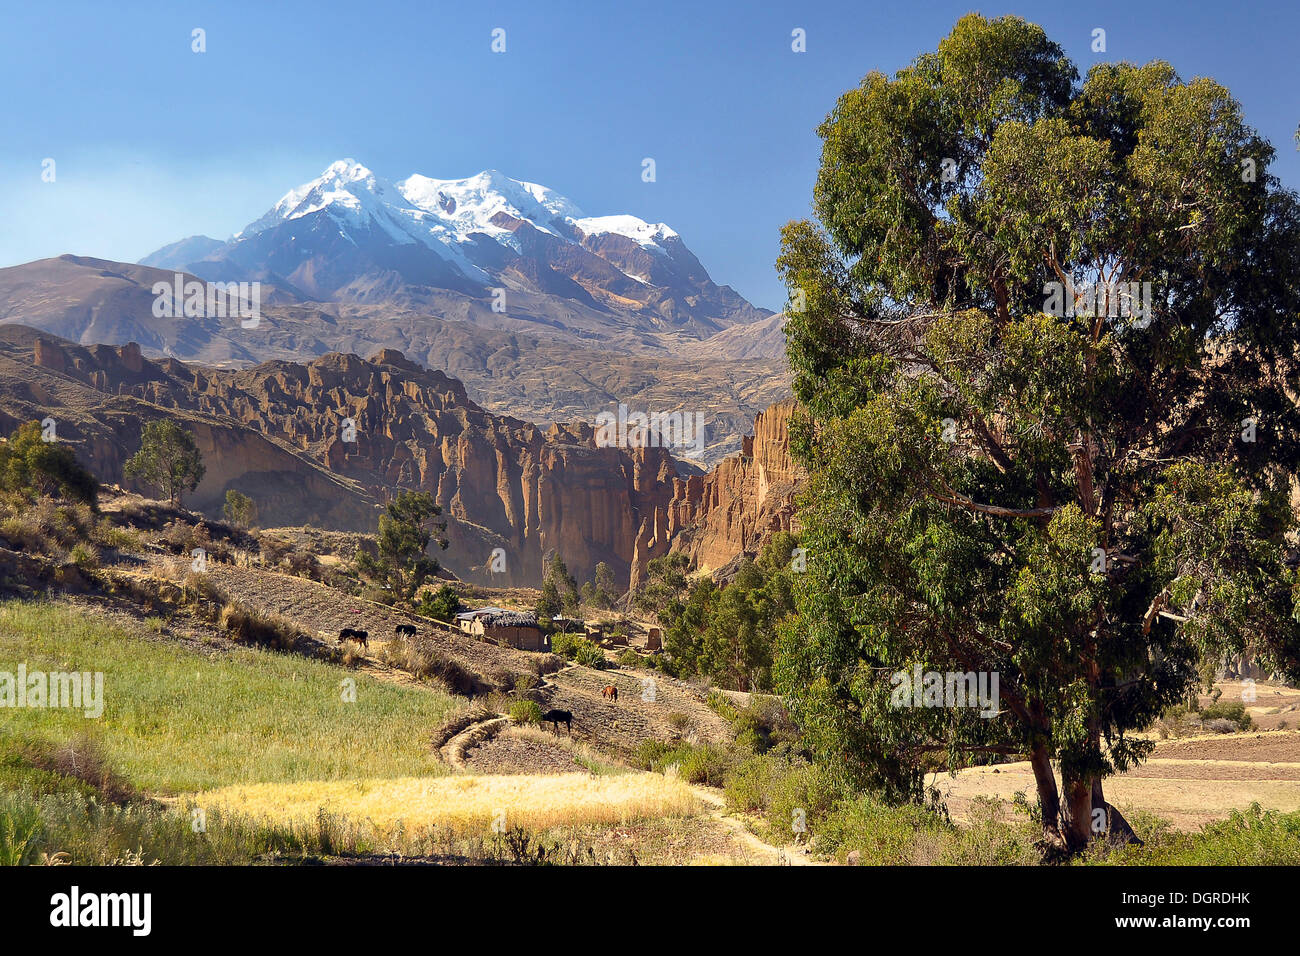 Palca canyon and the Illimani mountain, Altiplano high plateau, Andes mountain range, La Paz, Bolivia, South America Stock Photo